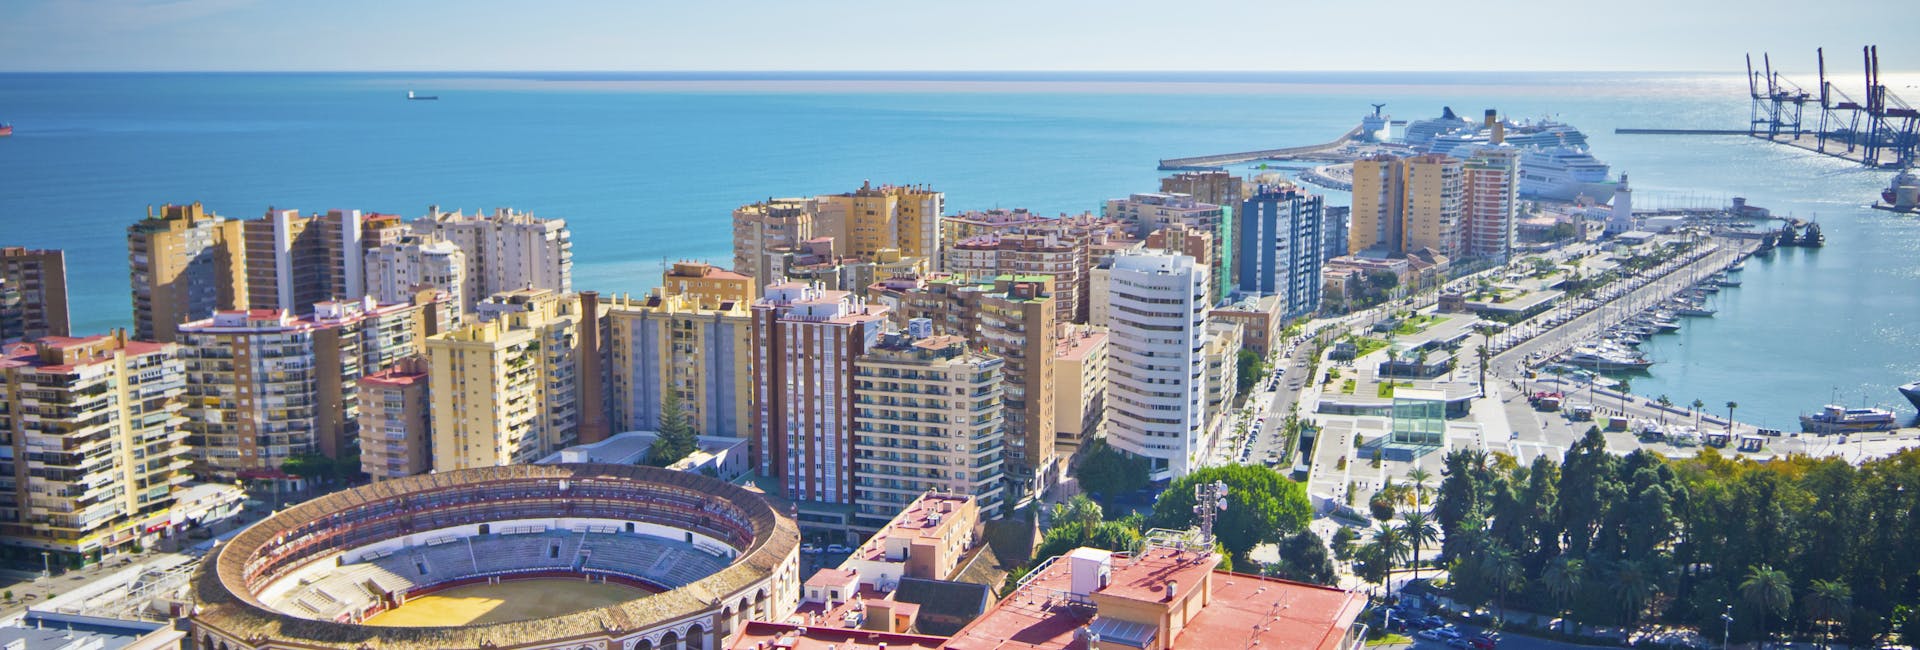 Málagan satama